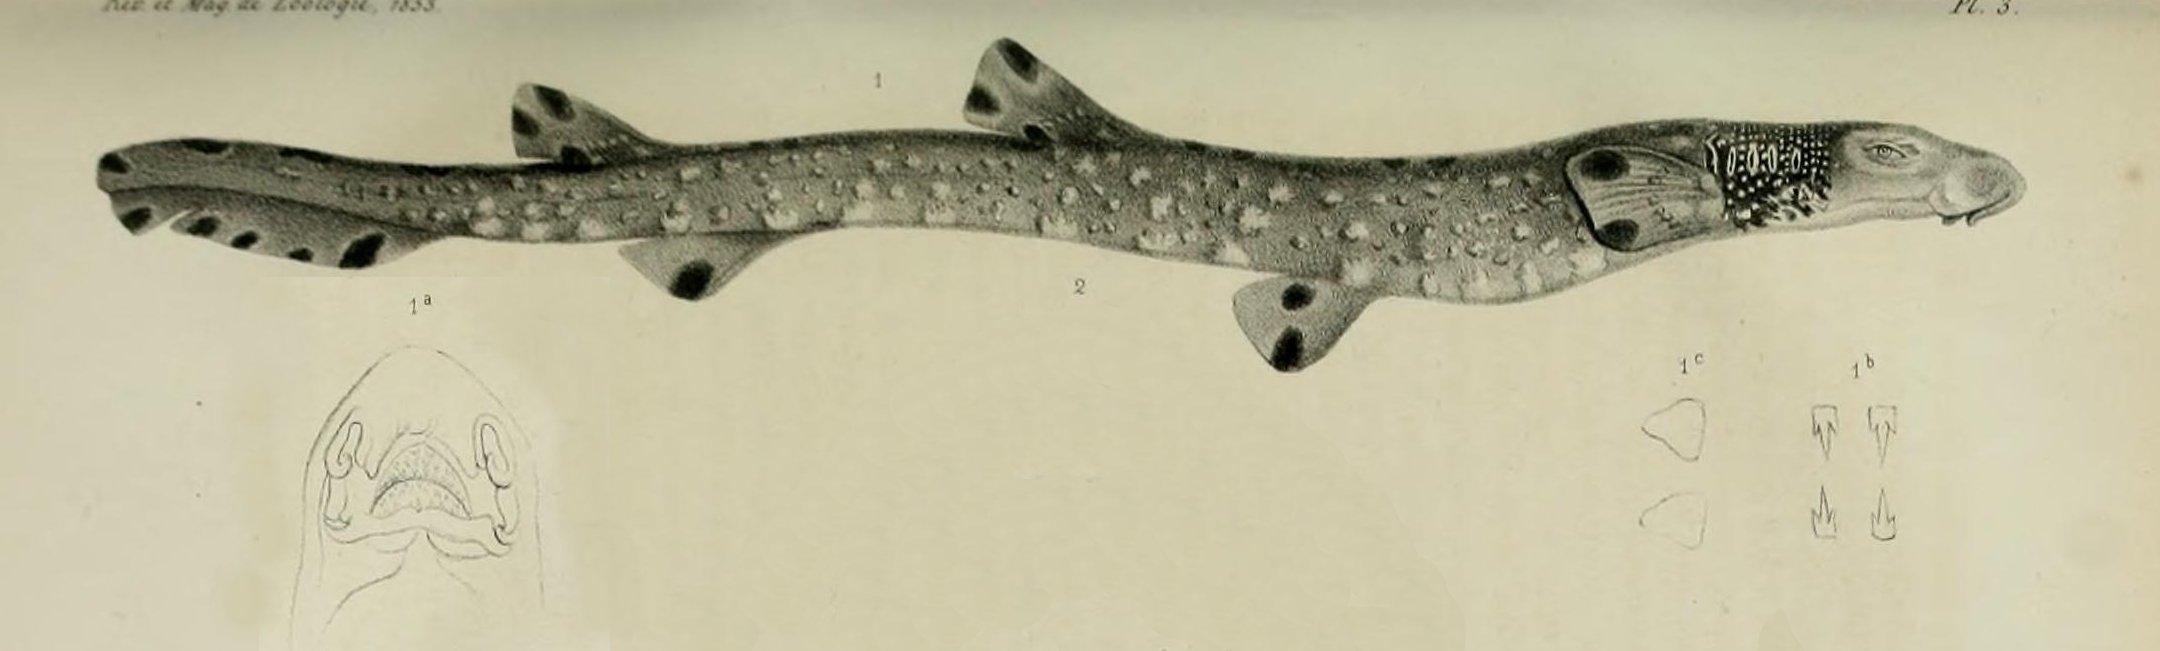 s800-166) RUSTY CARPET shark egg case casing educational Parascyllium sharks  | eBay